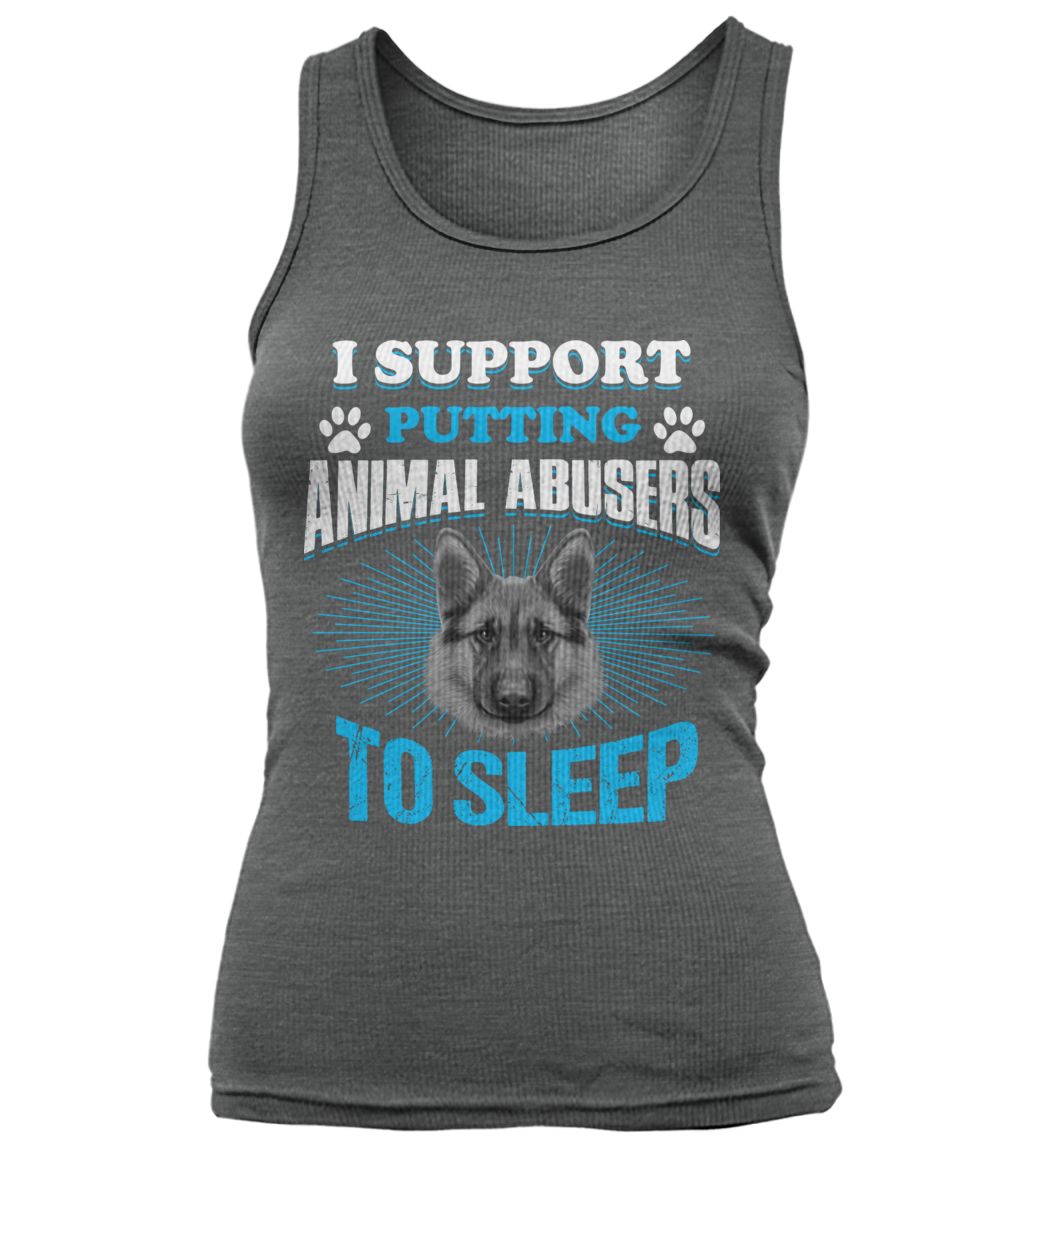 German shepherd I support putting animal abusers to sleep women's tank top